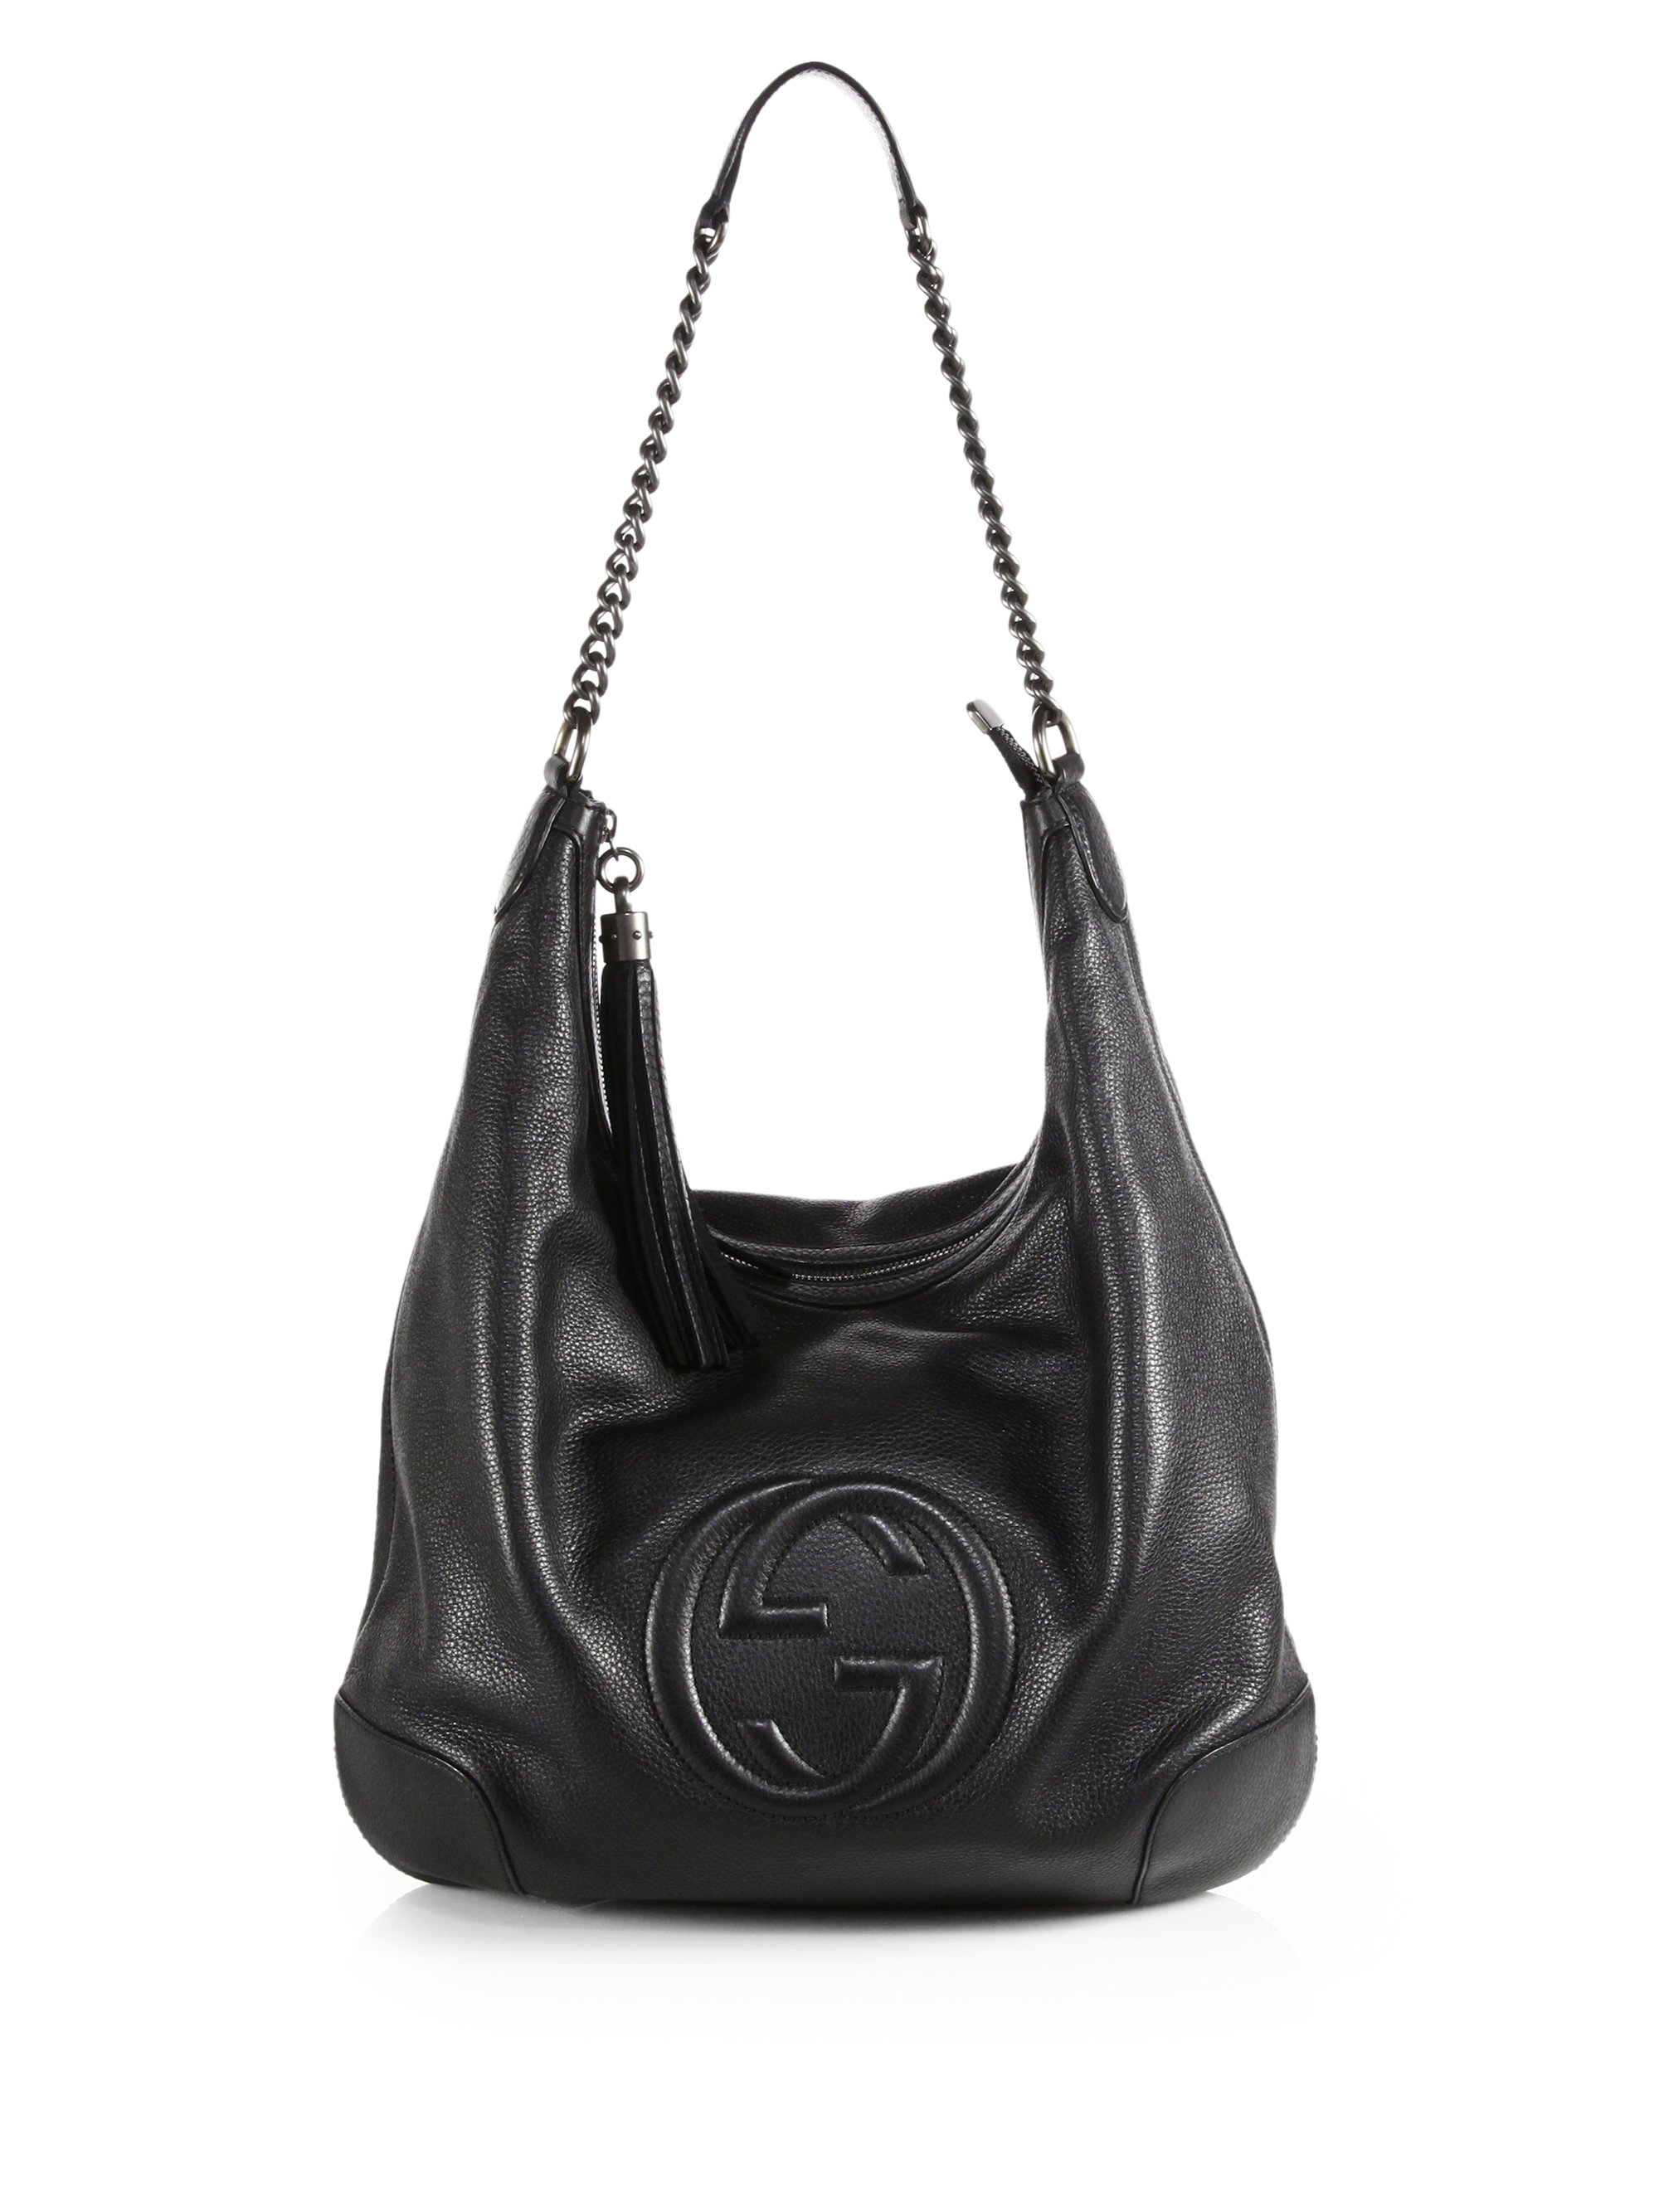 Gucci Soho Metallic Leather Chain Shoulder Bag in Black | Lyst